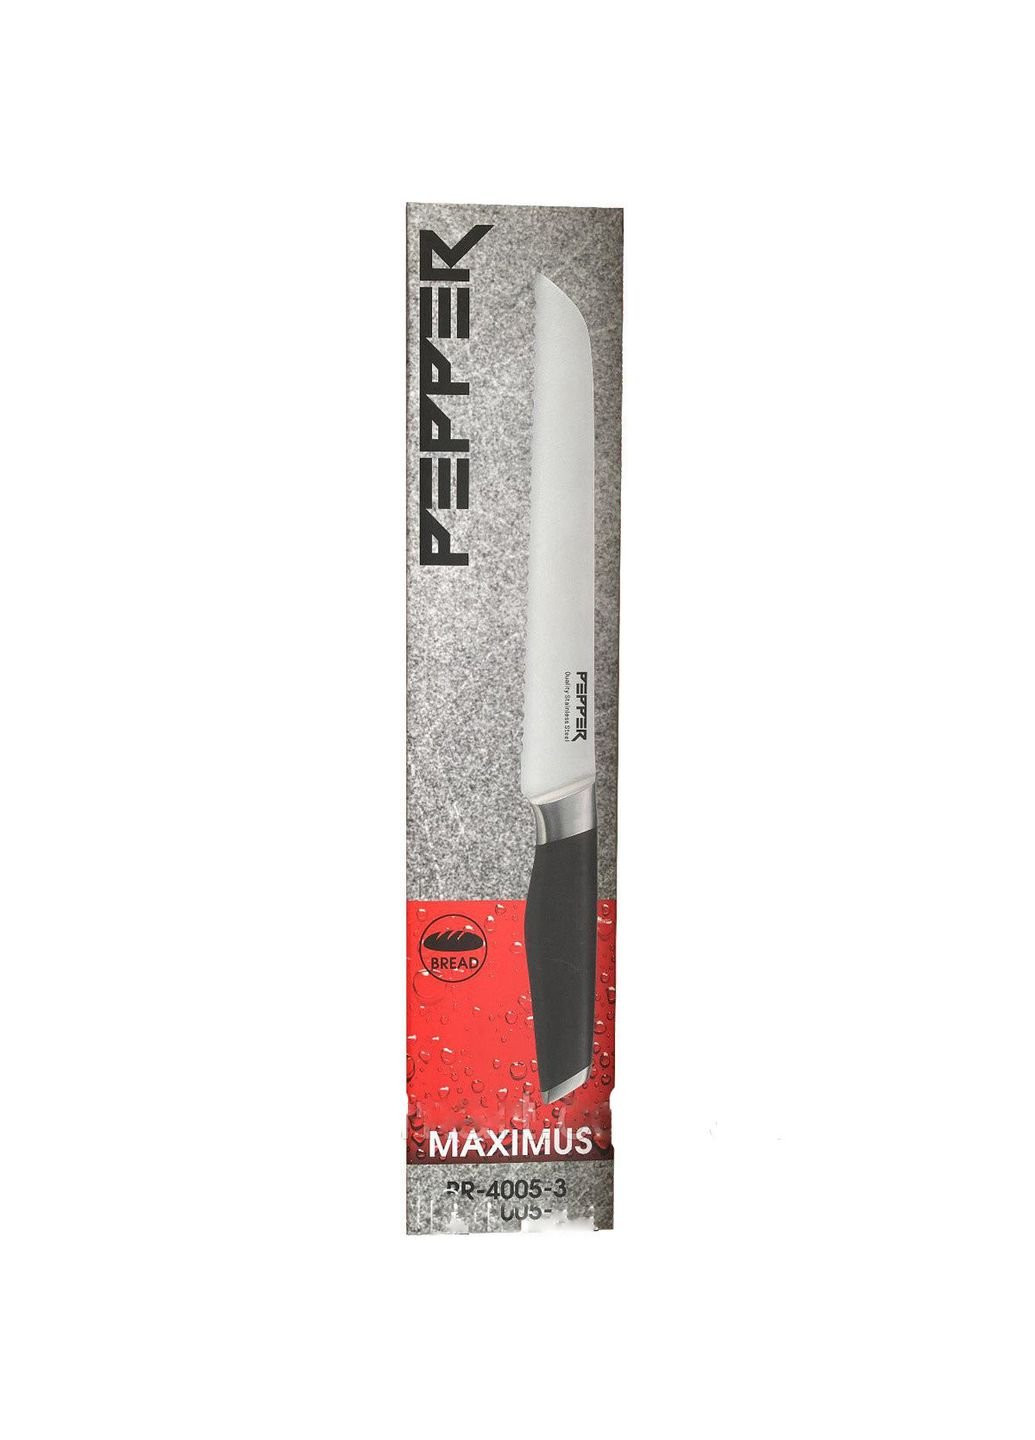 Нож для хлеба Maximus PR-4005-3 20.3 см Pepper (253631483)